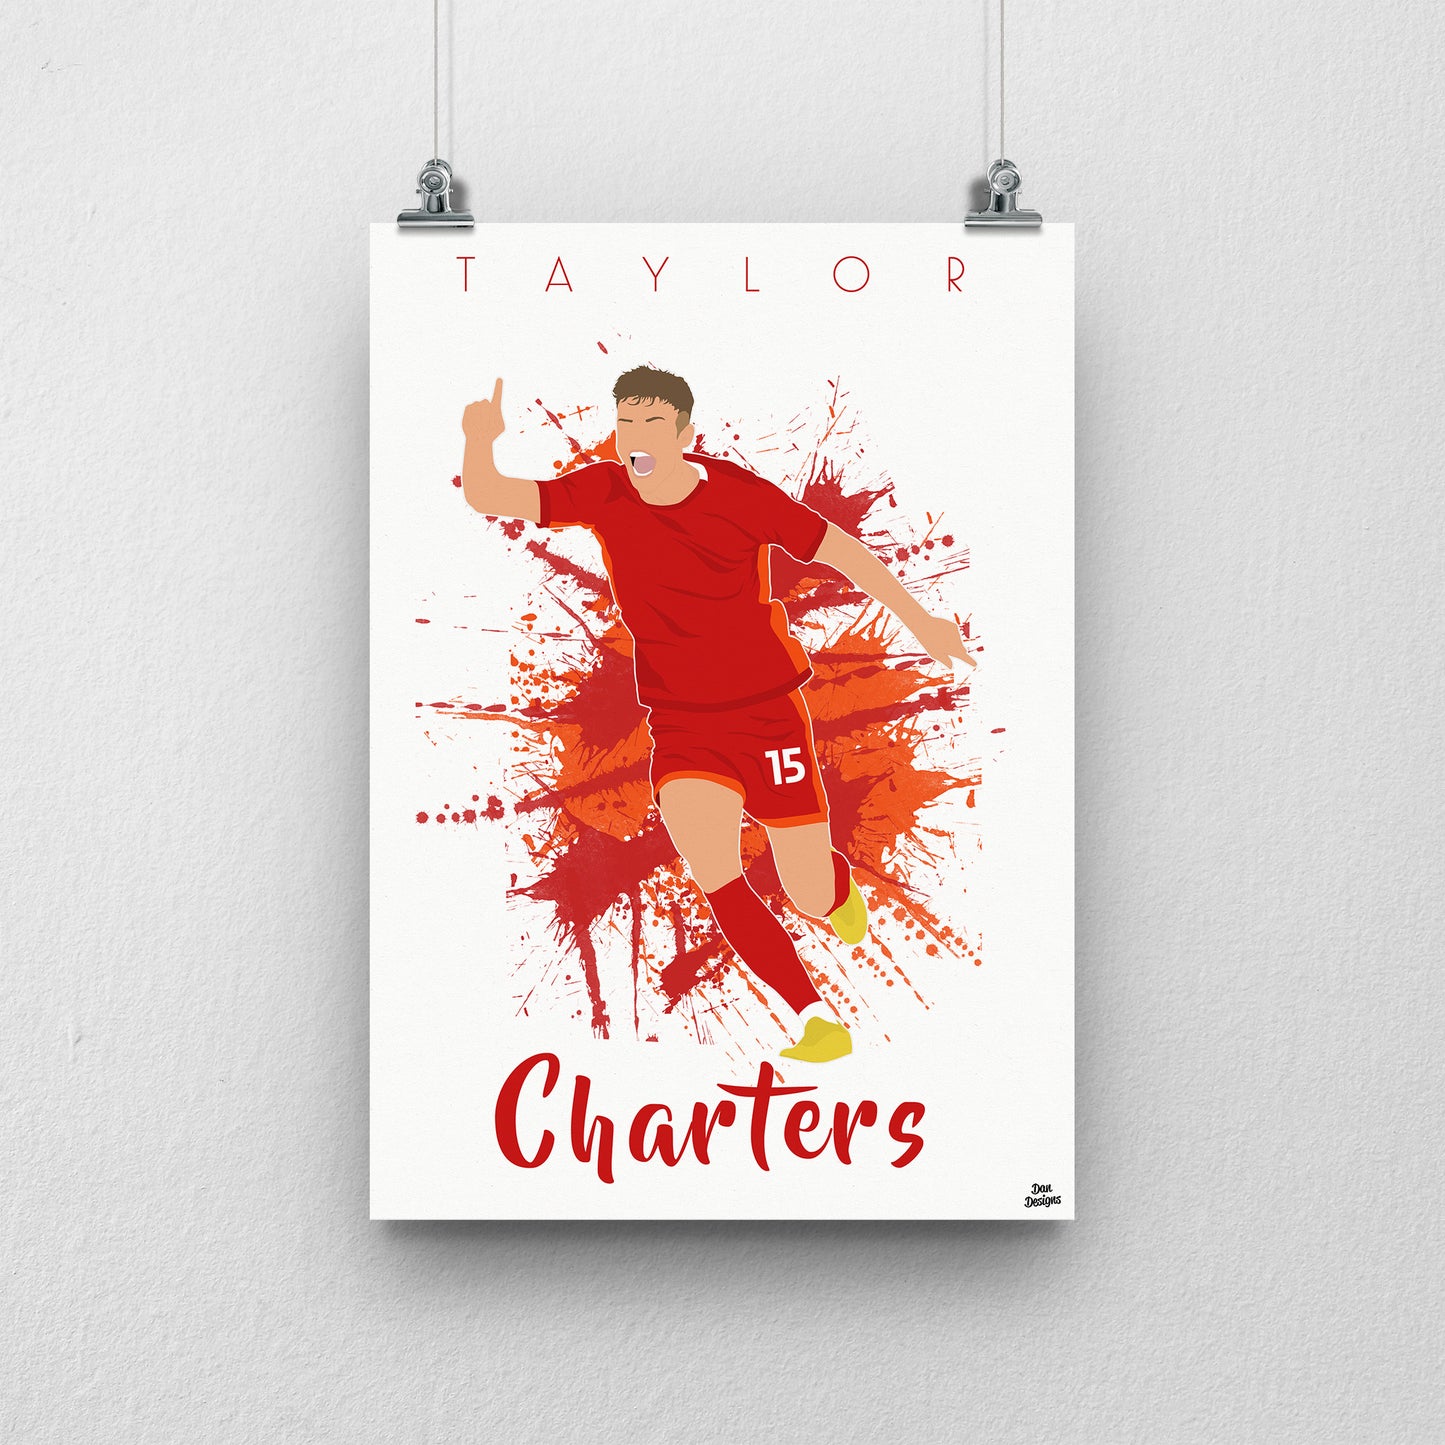 Taylor Charters Final Print